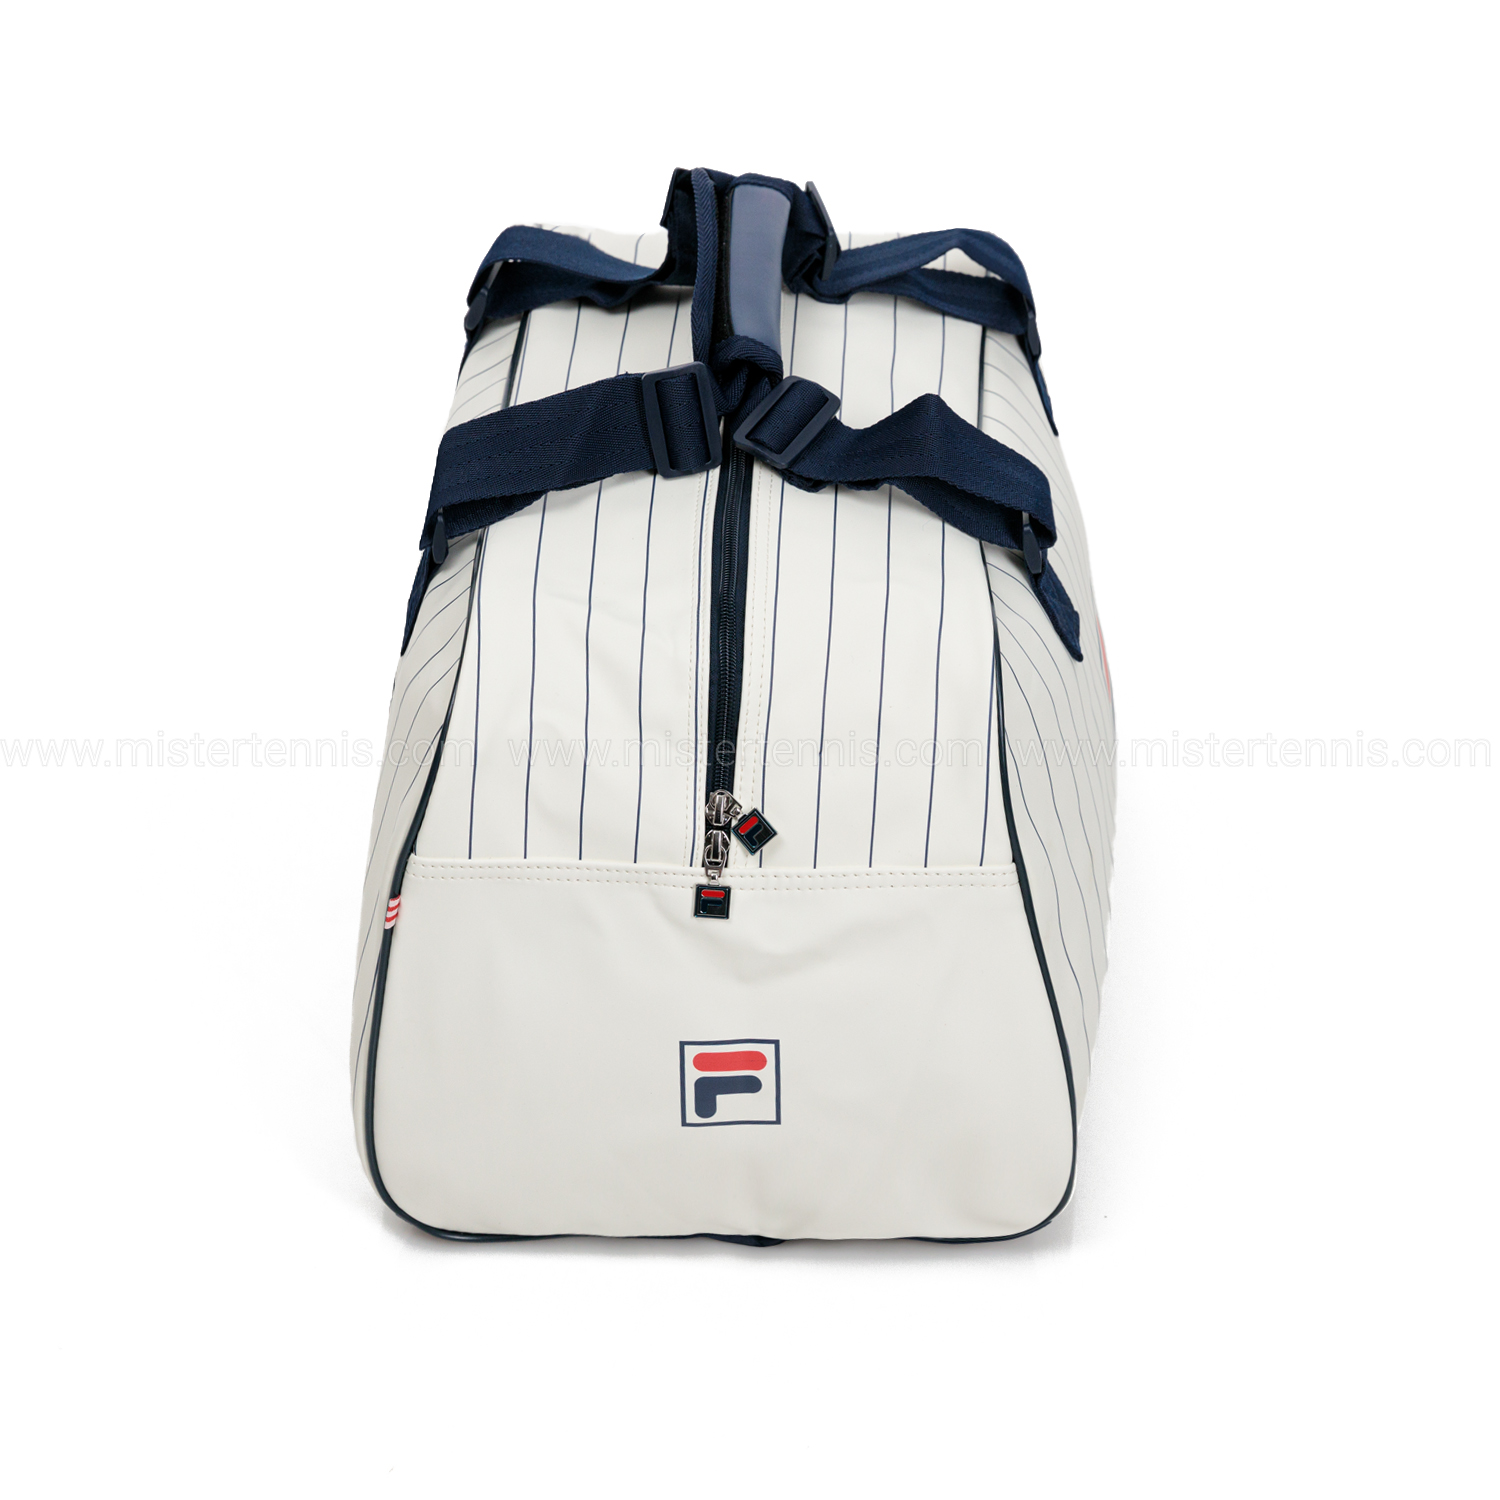 Fila The Classic Bag - White/Peacoat Blue Stripes